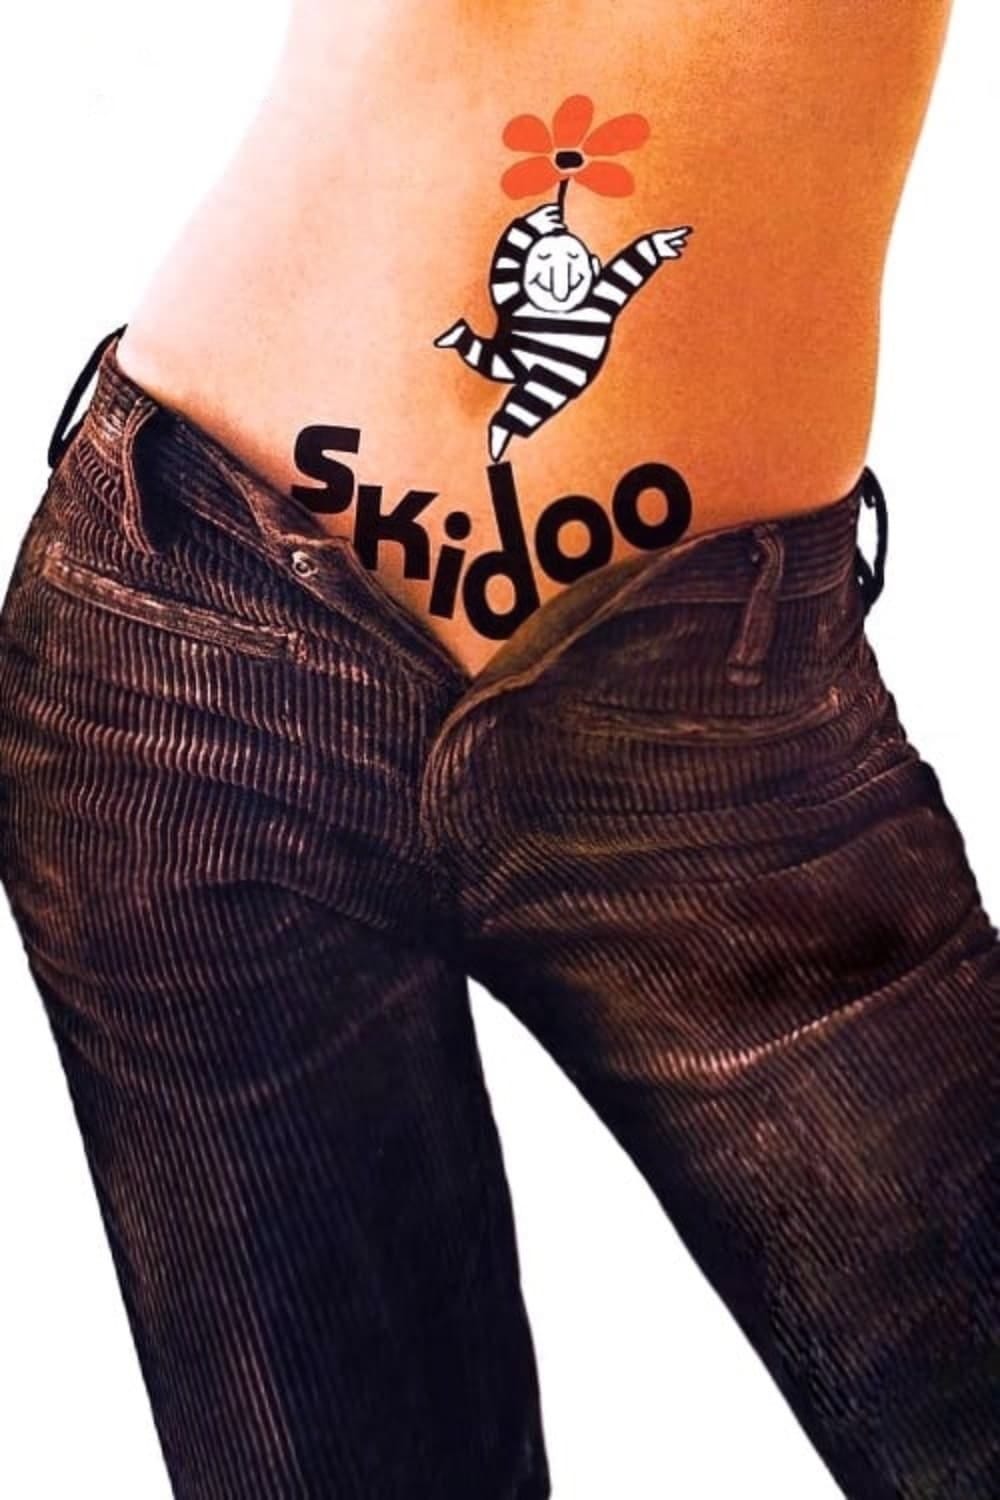 Skidoo (1968) | Poster